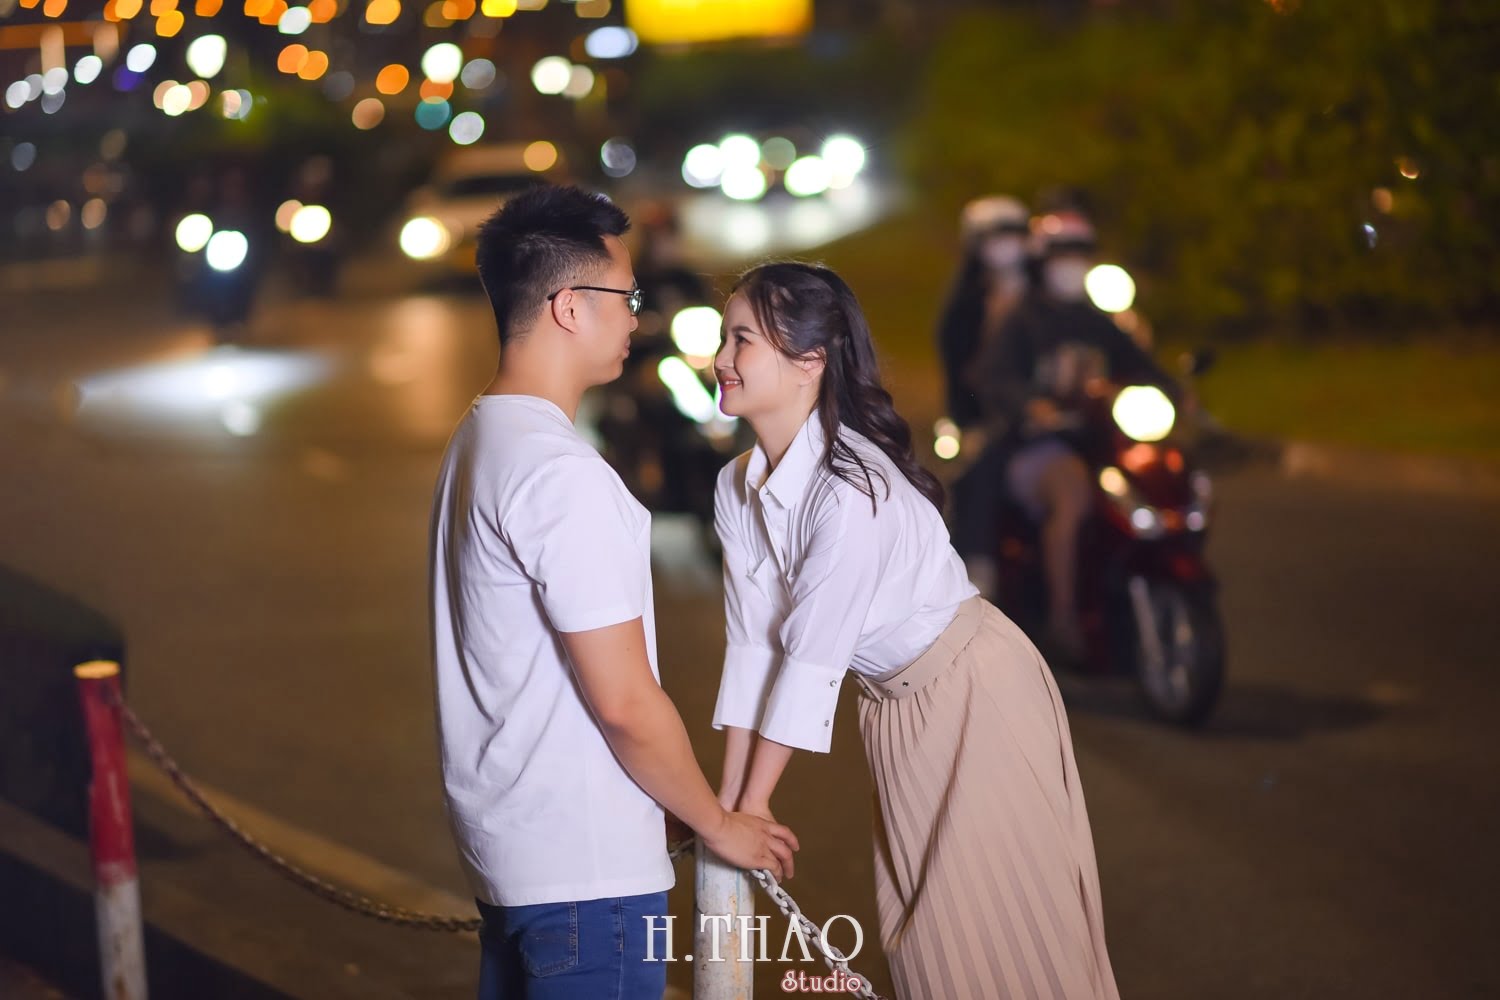 Anh chup couple ban dem 11 min - Album ảnh couple chụp buổi tối đẹp lung linh - HThao Studio